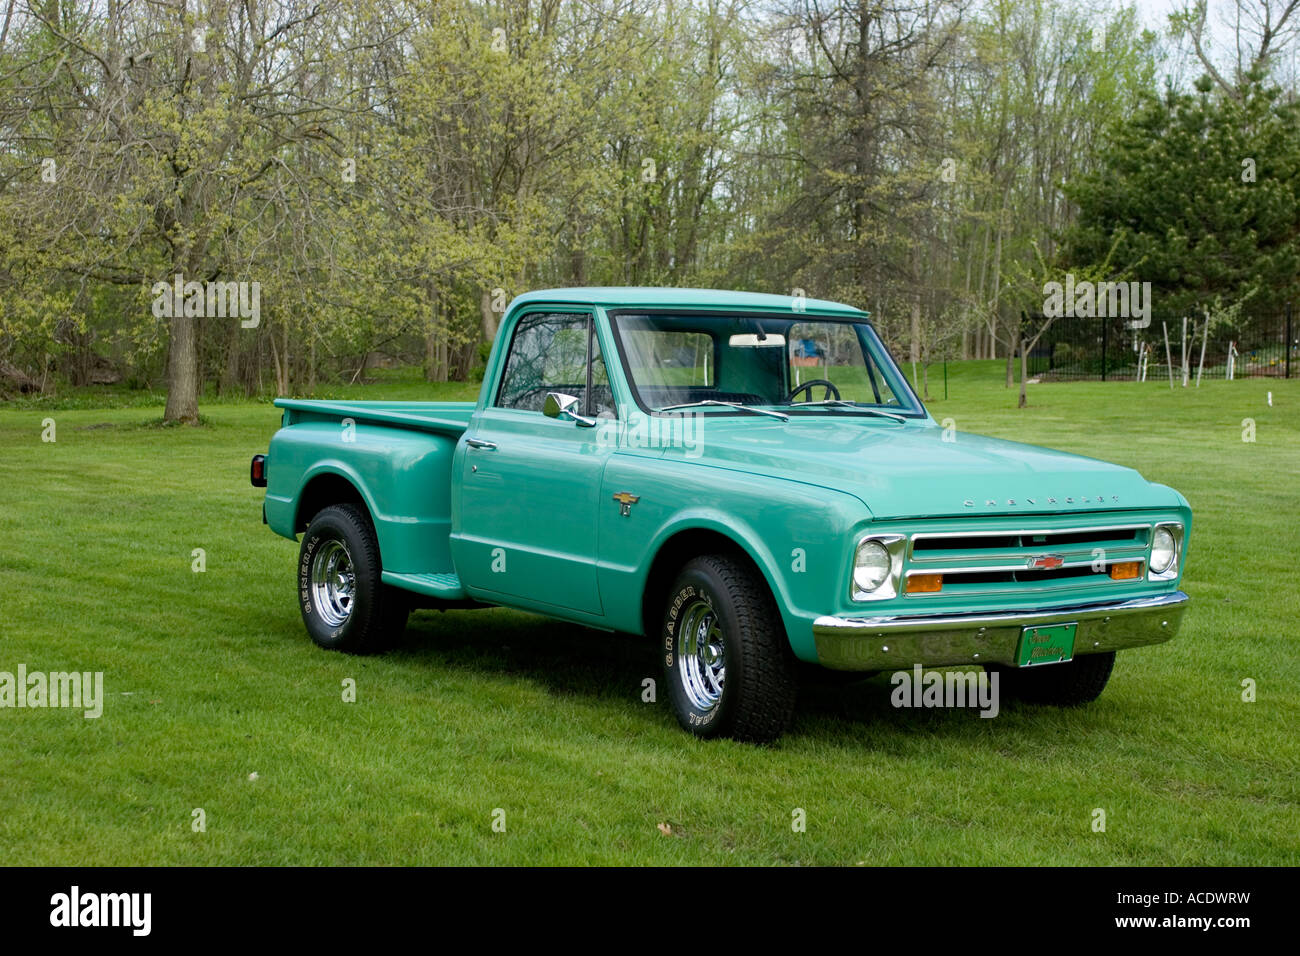 1967 1/2 Ton Chevrolet Pick Up truck Stock Photo